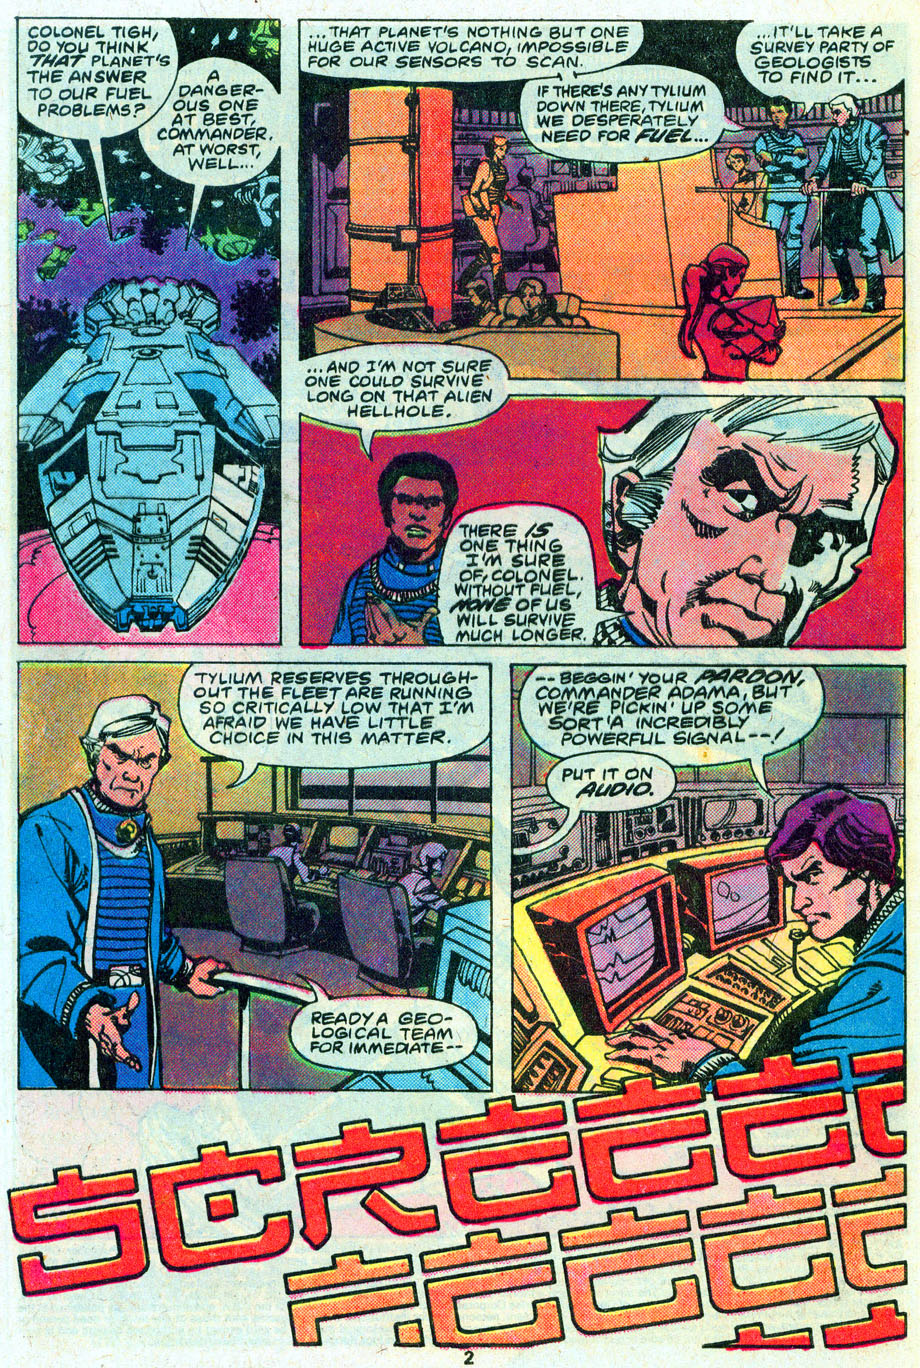 Read online Battlestar Galactica comic -  Issue #16 - 3